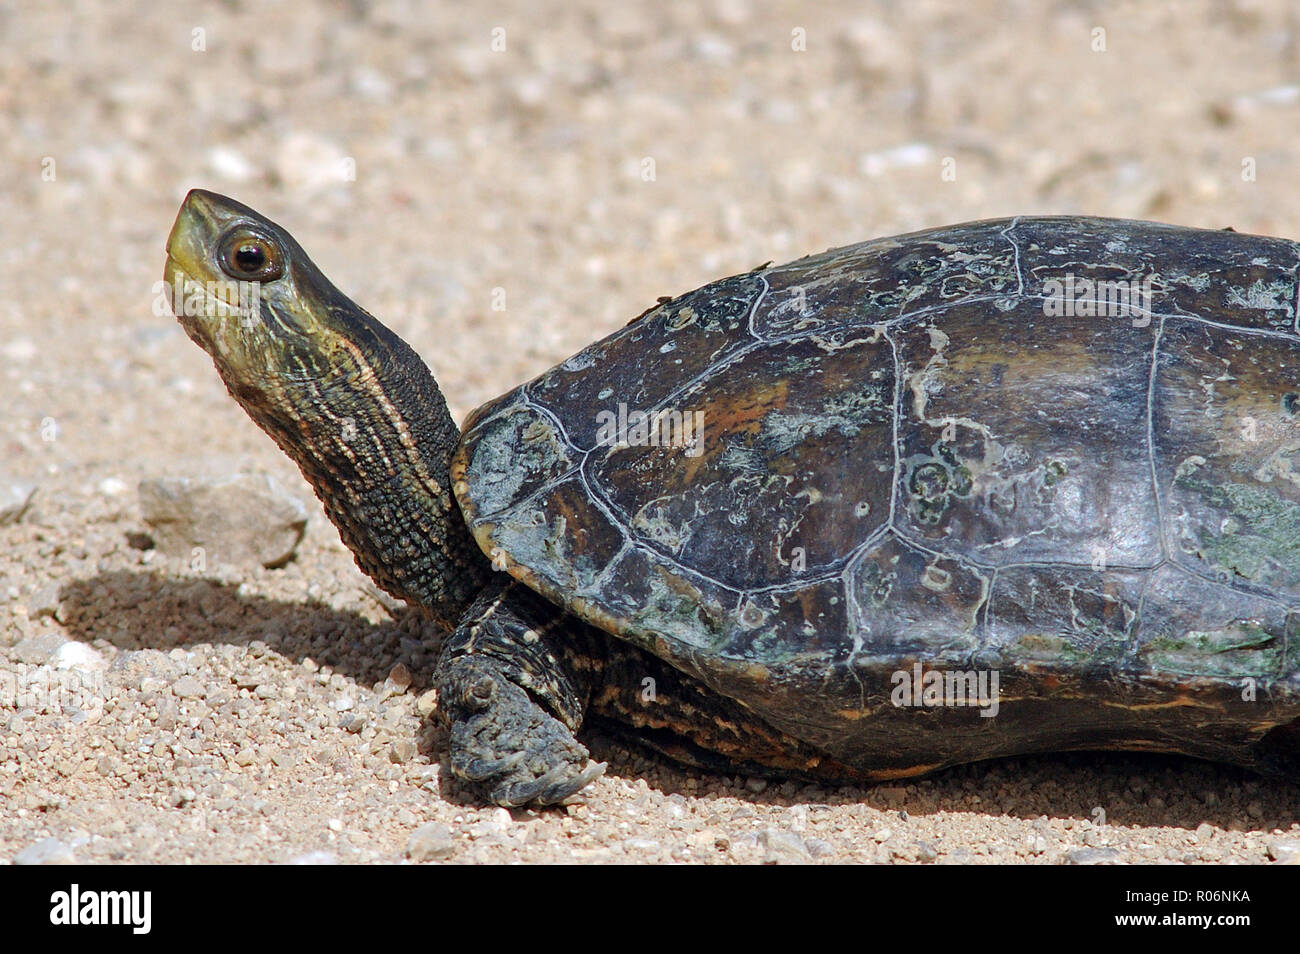 Swamp turtle basking in the sun Stock Photo